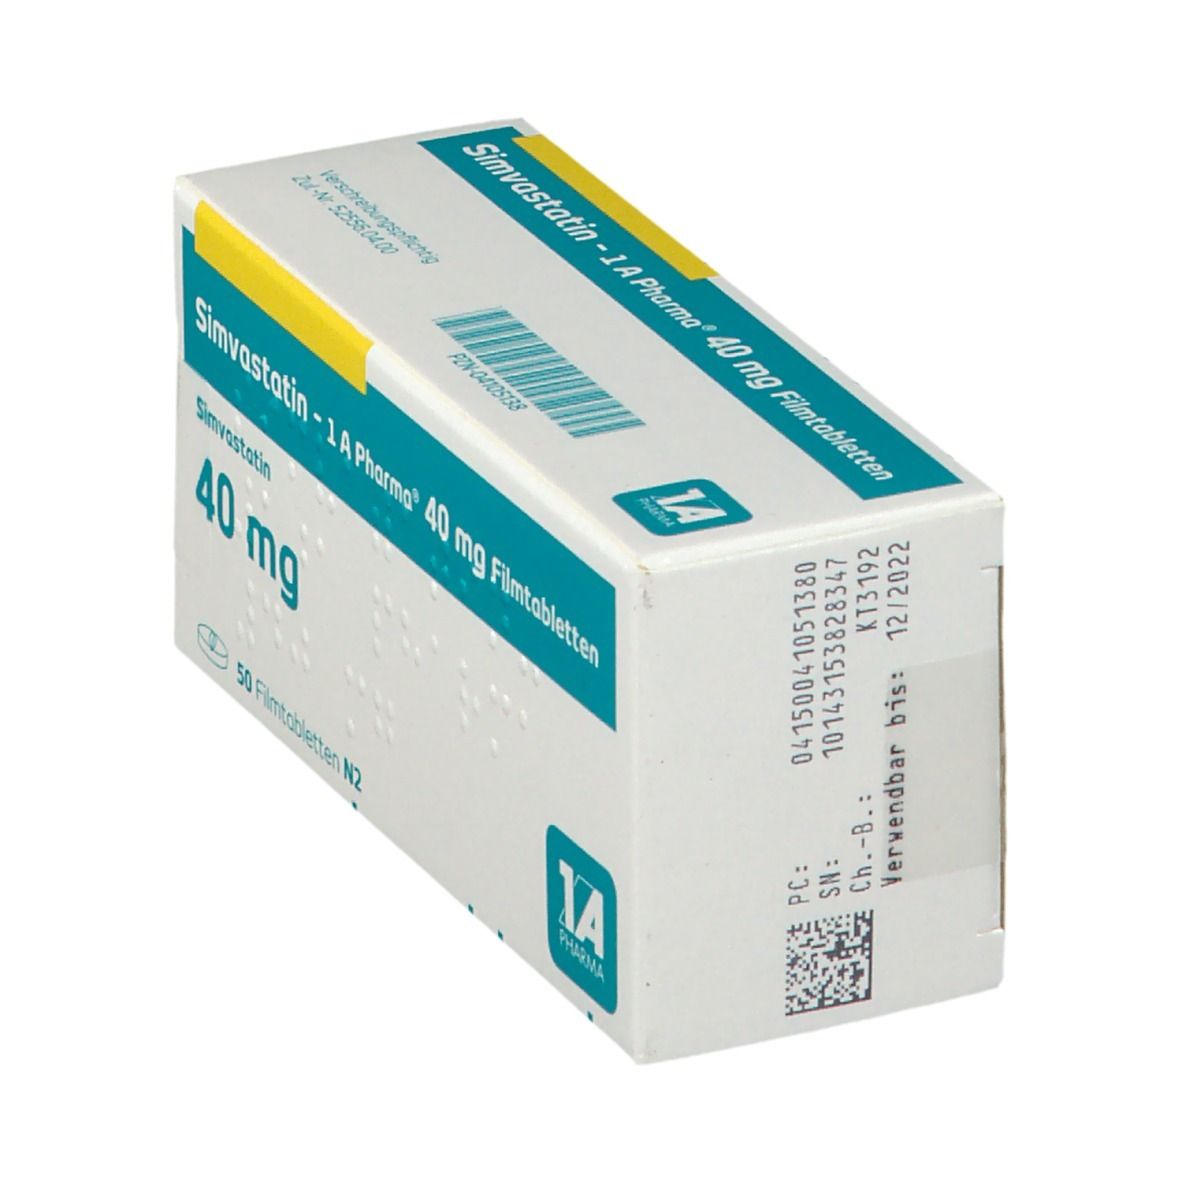 Simvastatin 1A Pharma® 40Mg